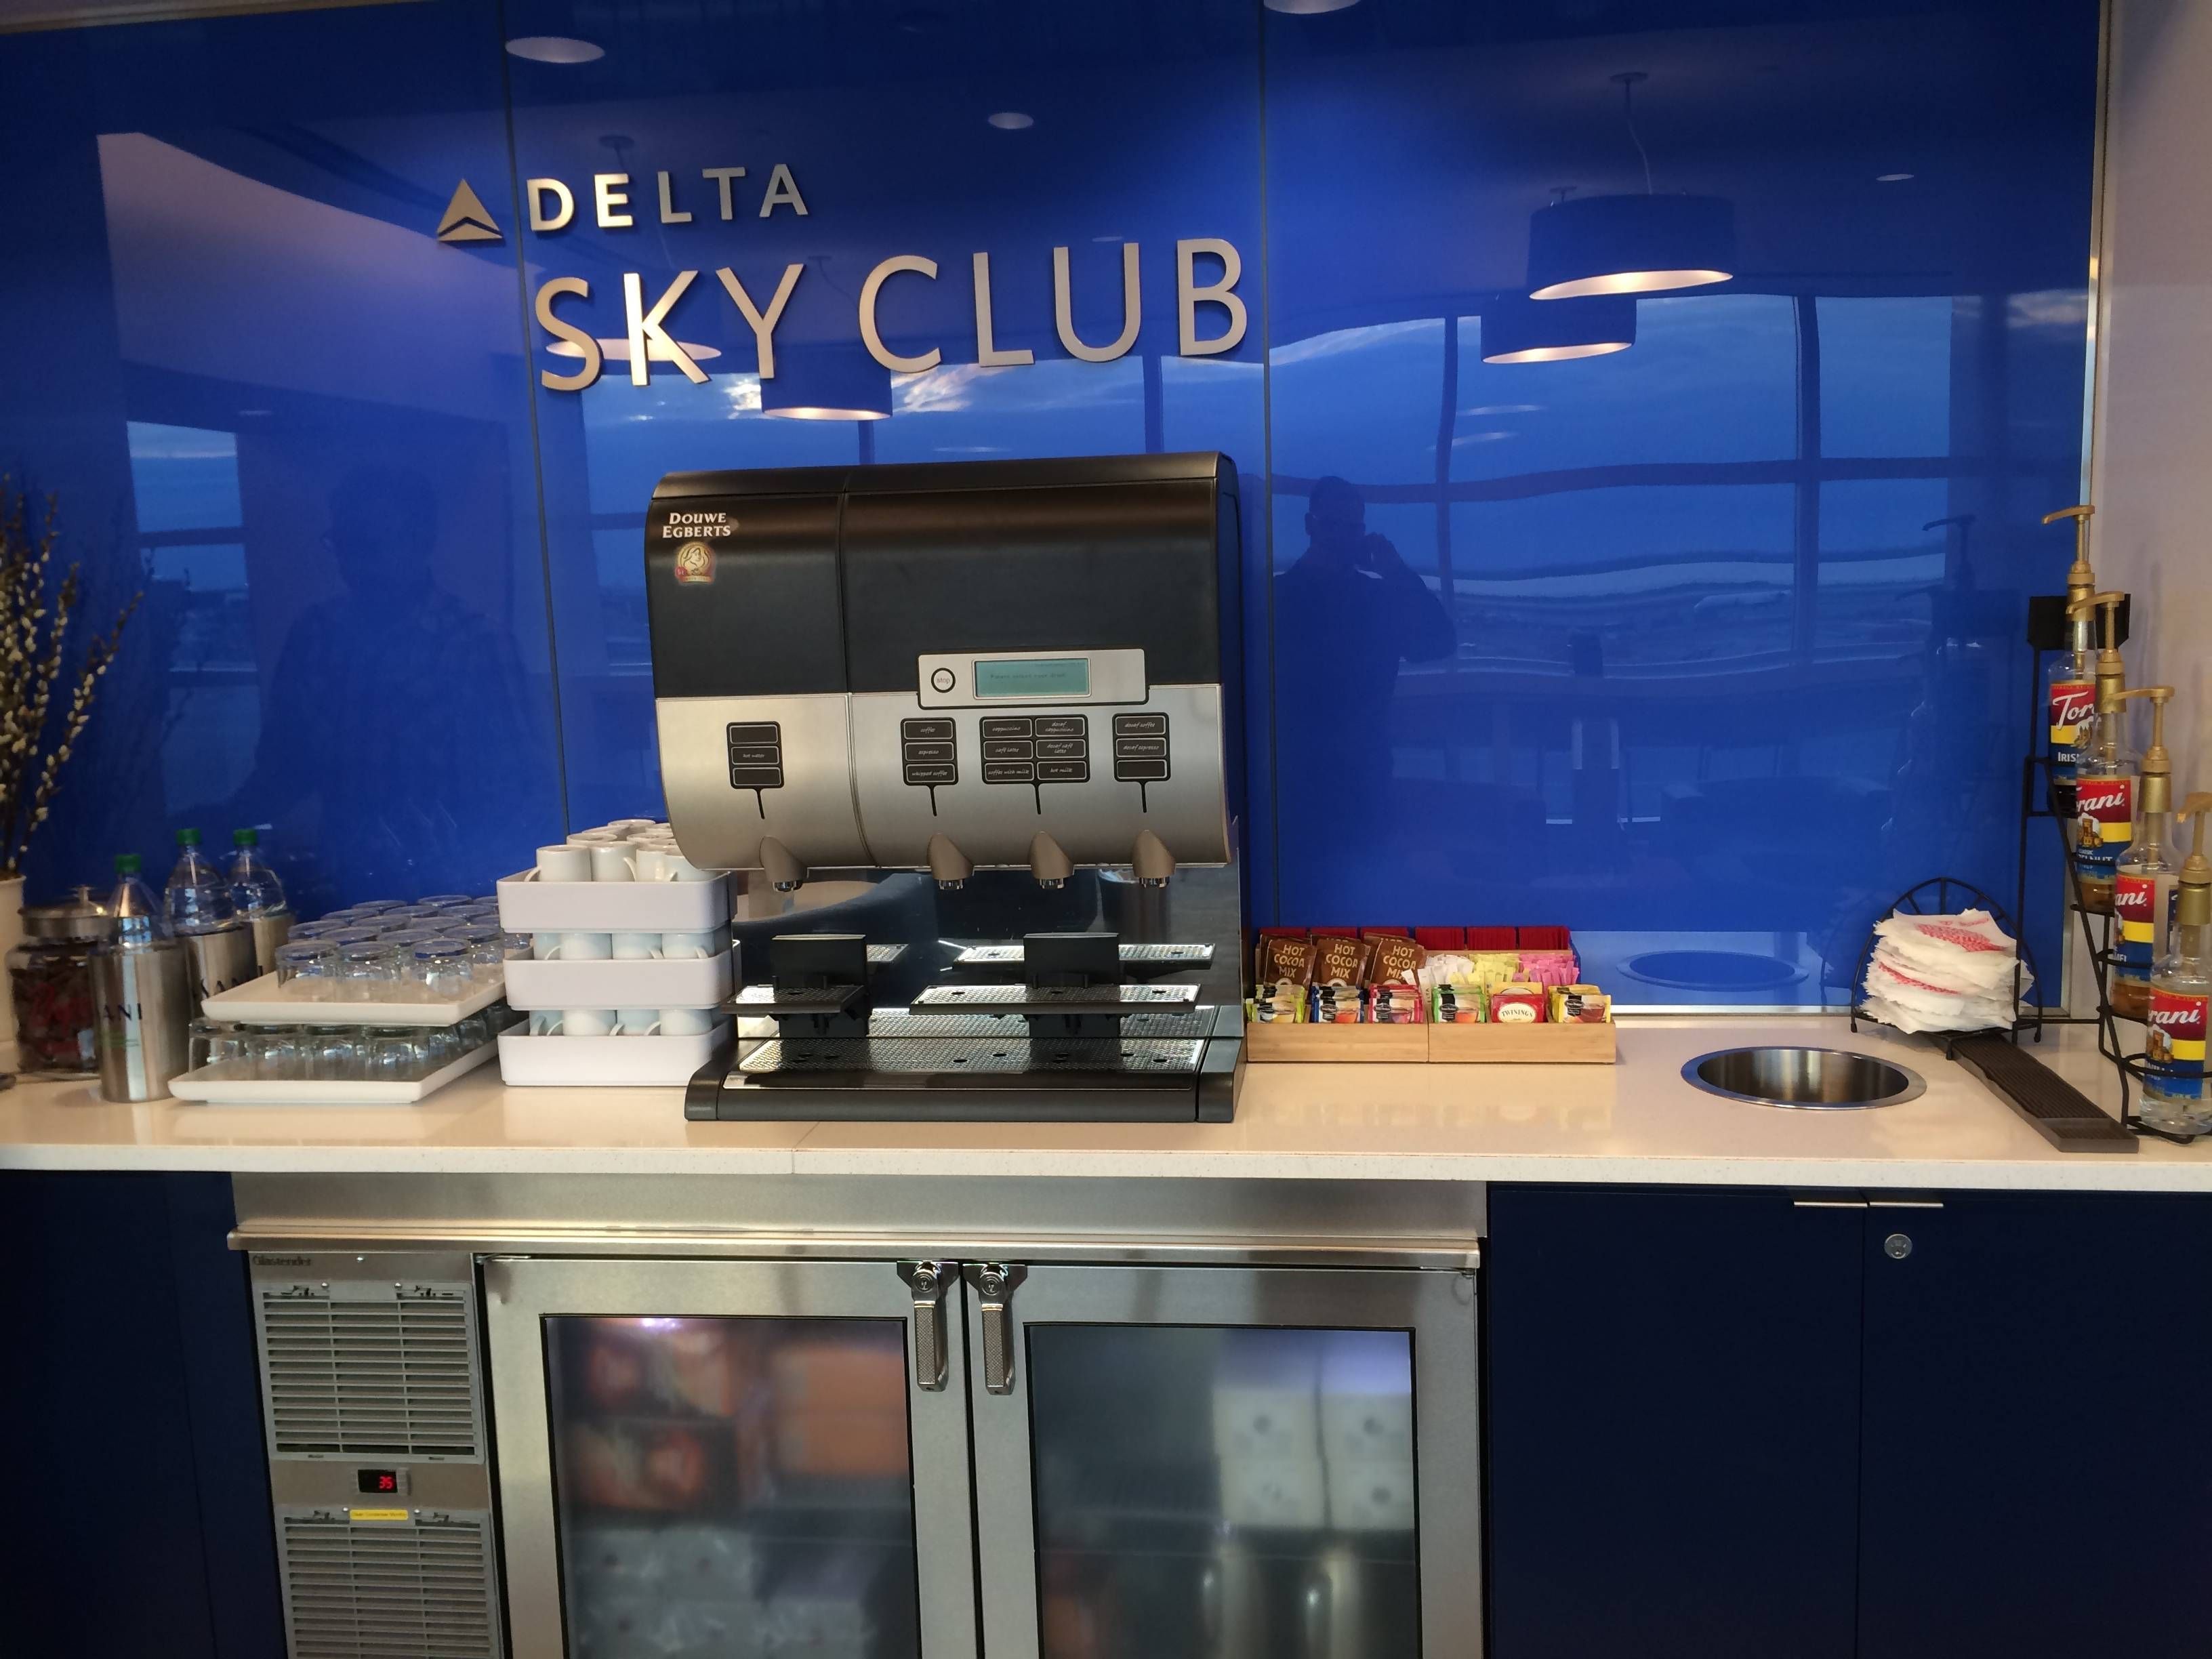 delta skyclub nova york jfk sala vip - passageirodeprimeria